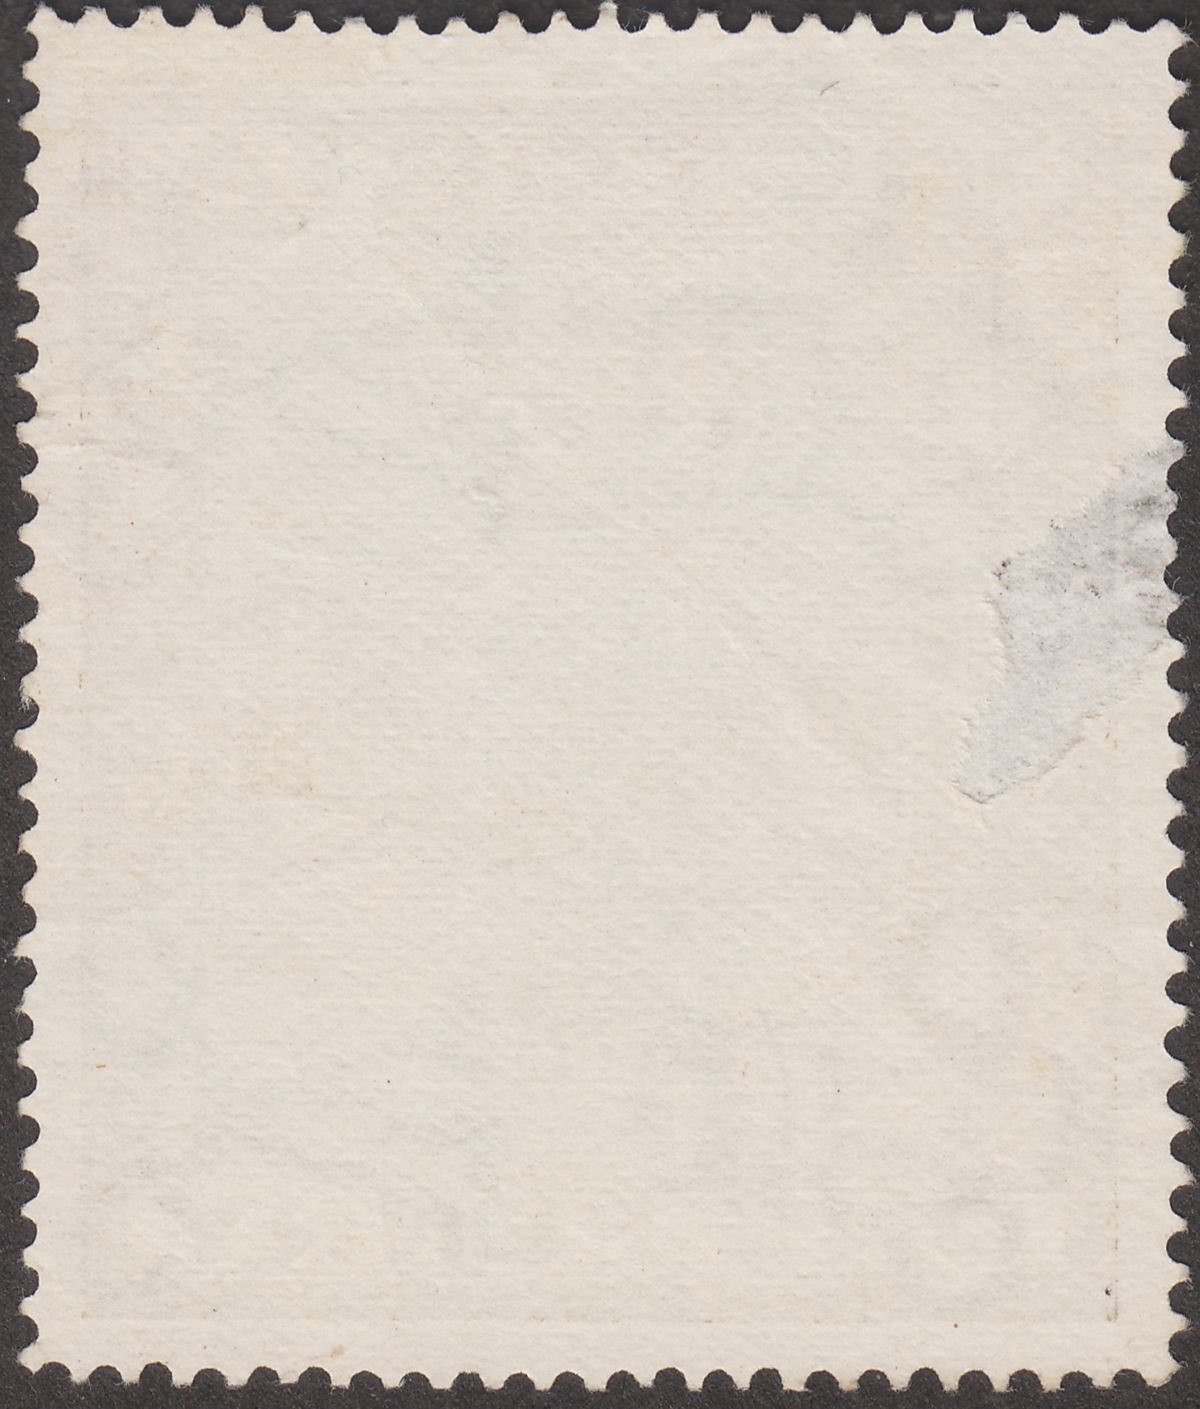 Victoria 1900 QV Charity Stamp 1d Olive-Brn Unused SG374 c£160 as mint Australia